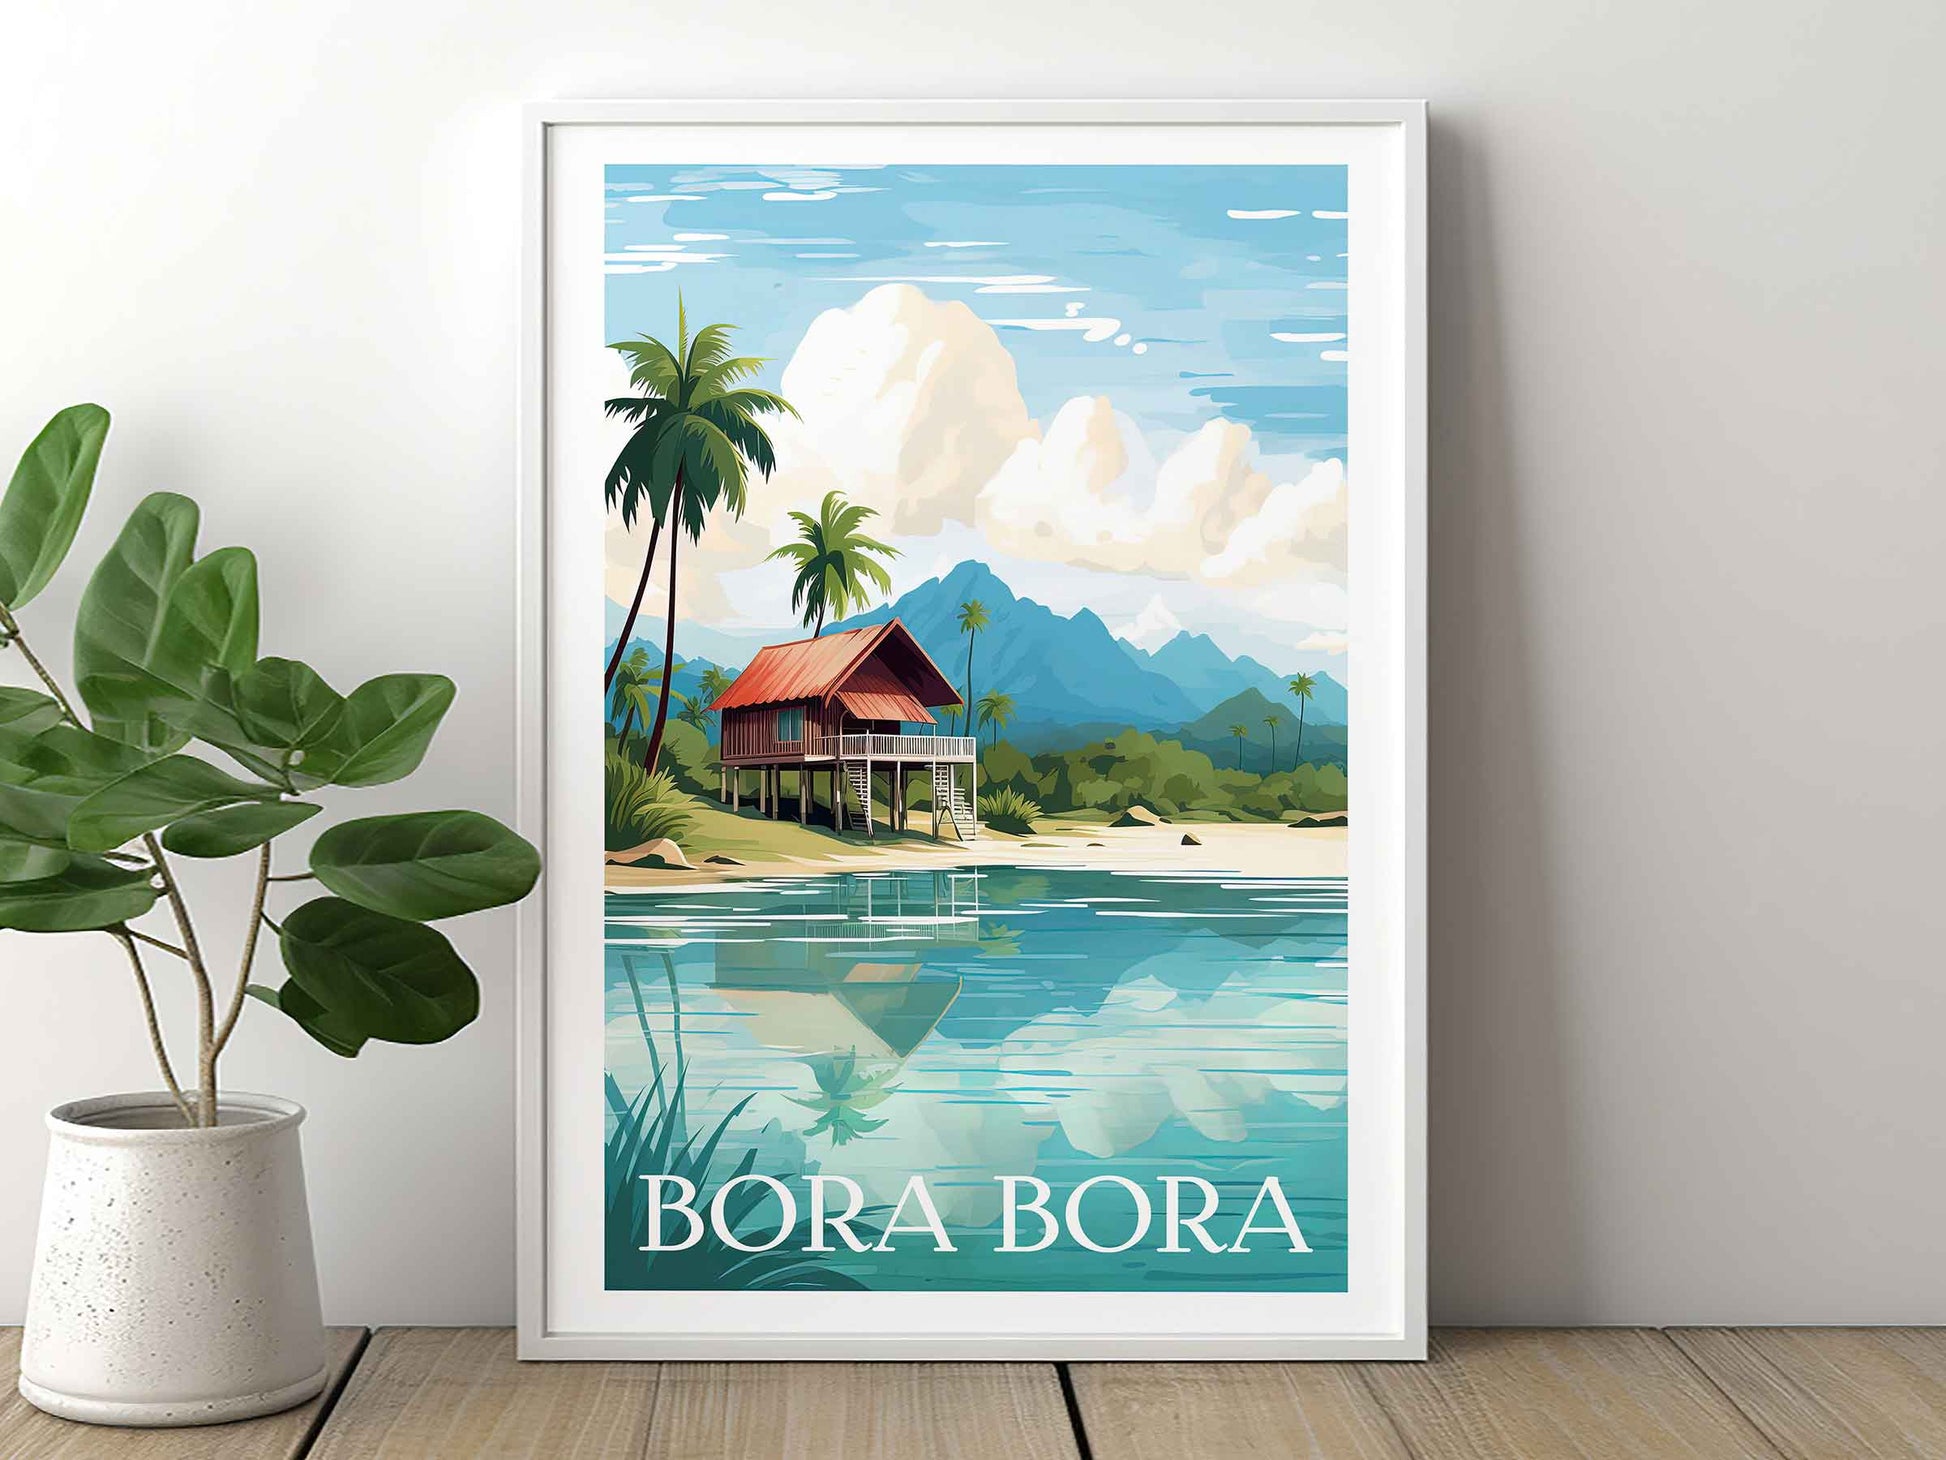 Framed Image of Bora Bora Poster Travel Wall Art Prints Illustration